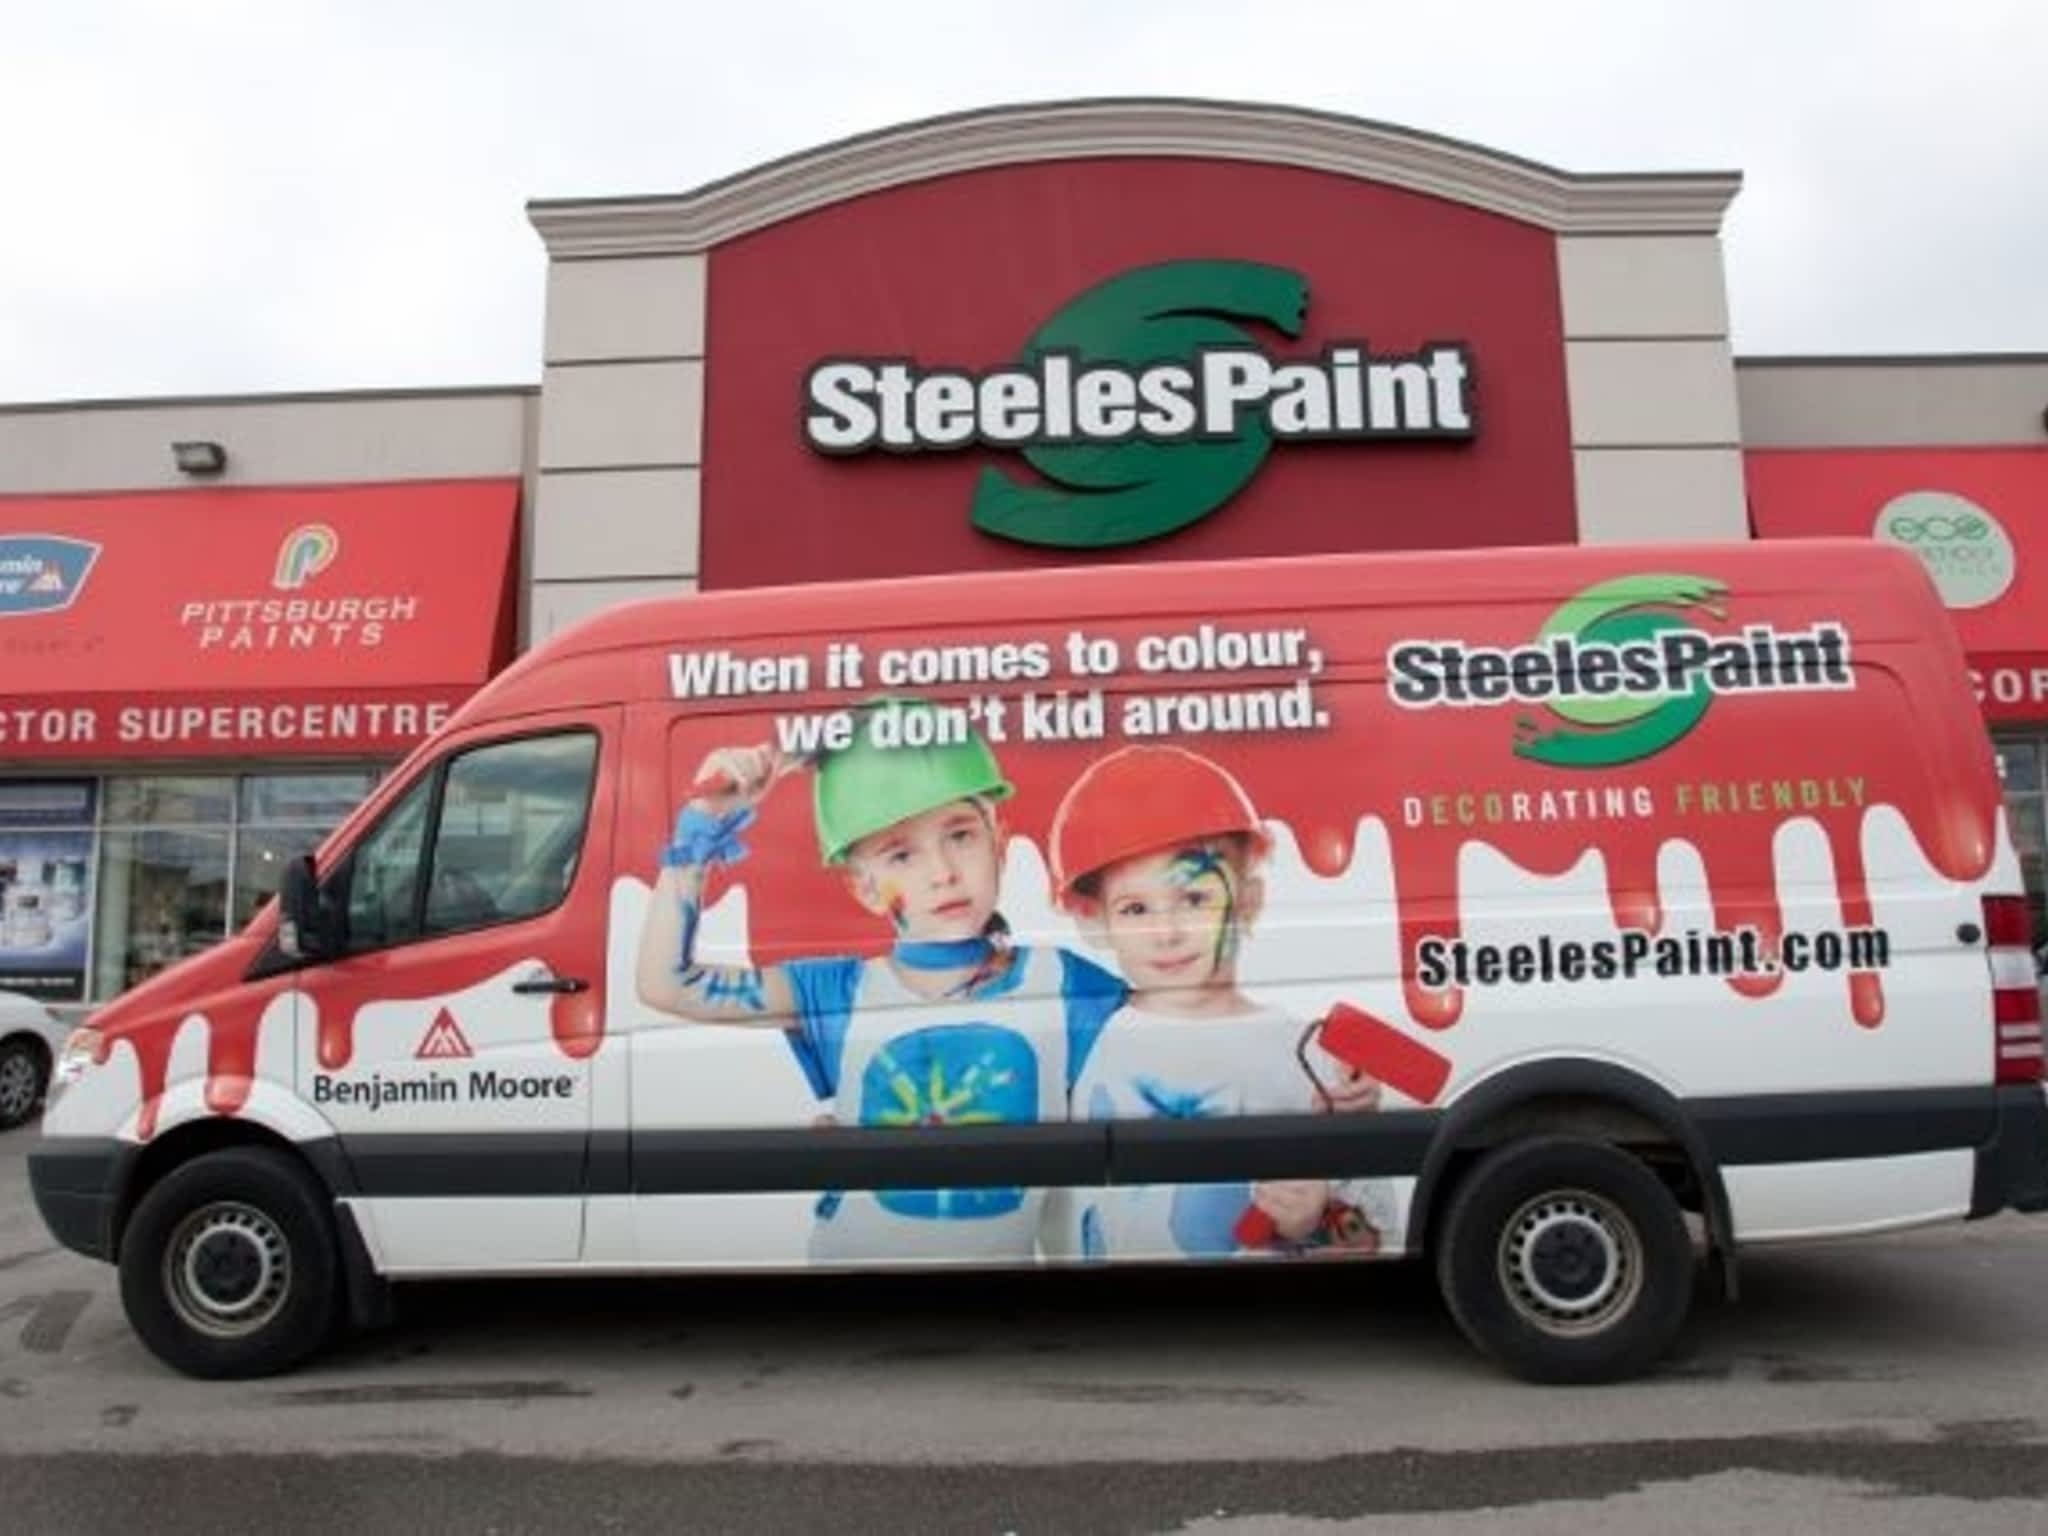 photo Steeles Paint & Decor Store